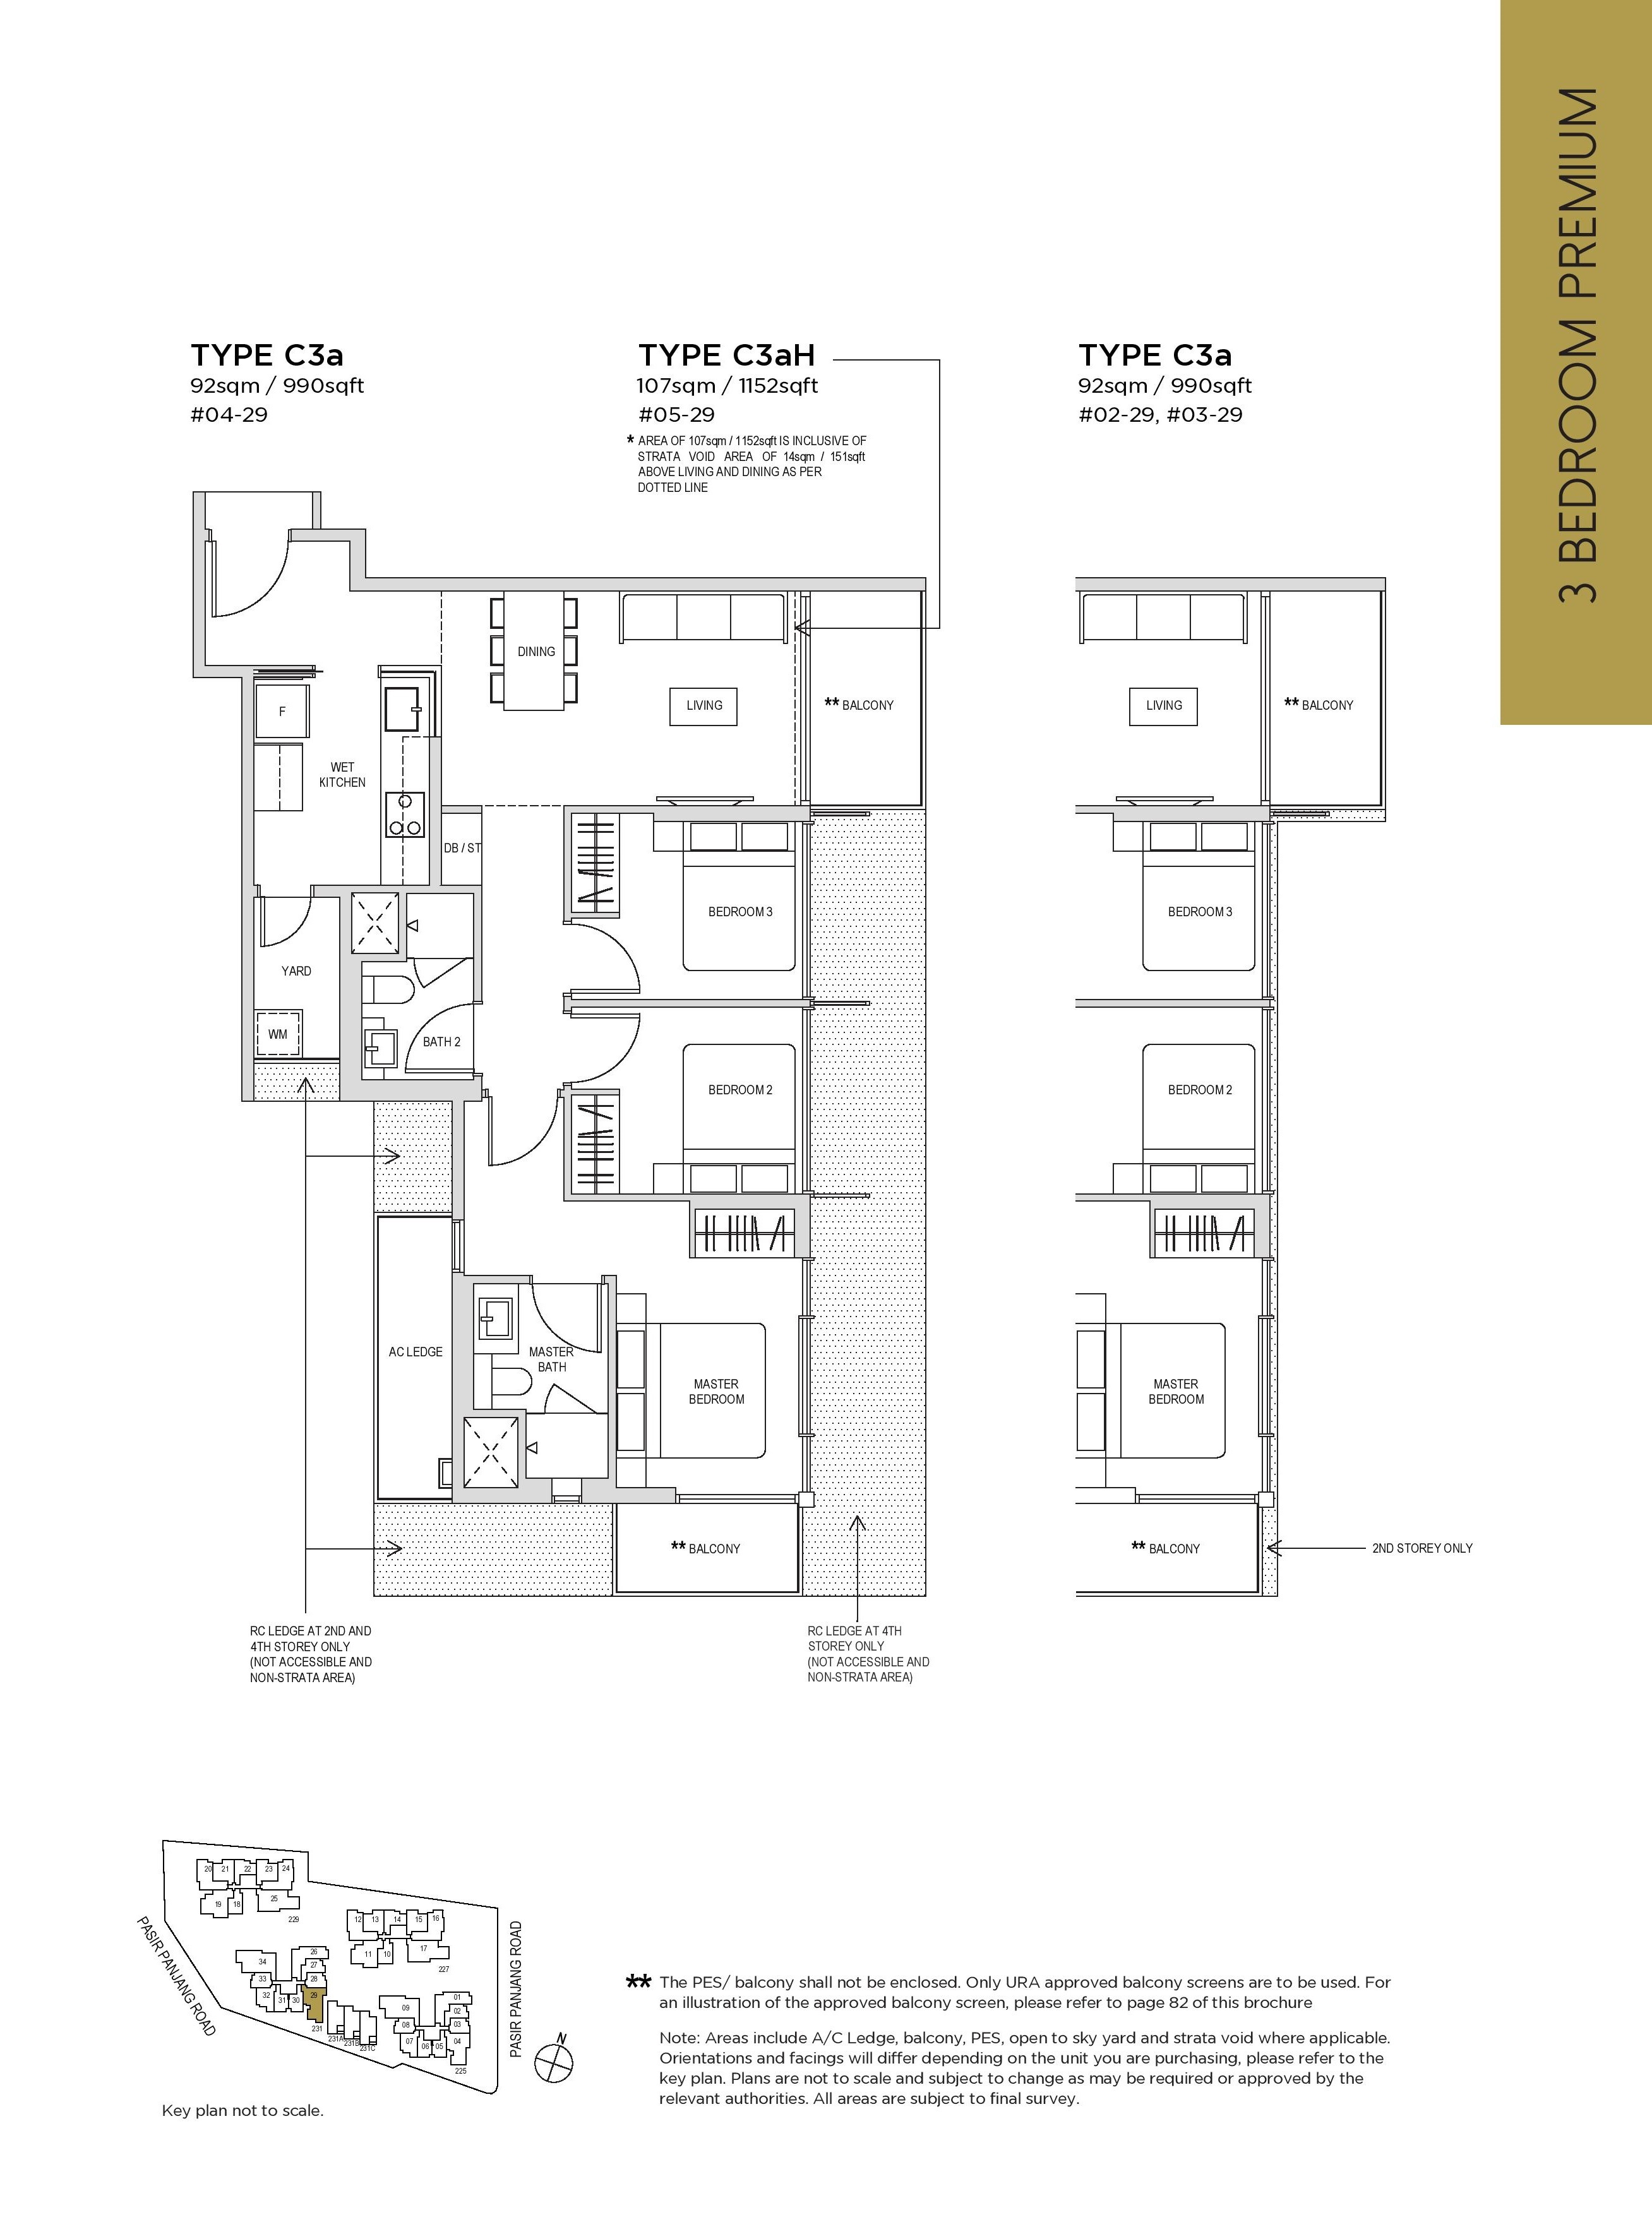 The Verandah Residences 3 Bedroom Floor Plans Type C3a, C3aH